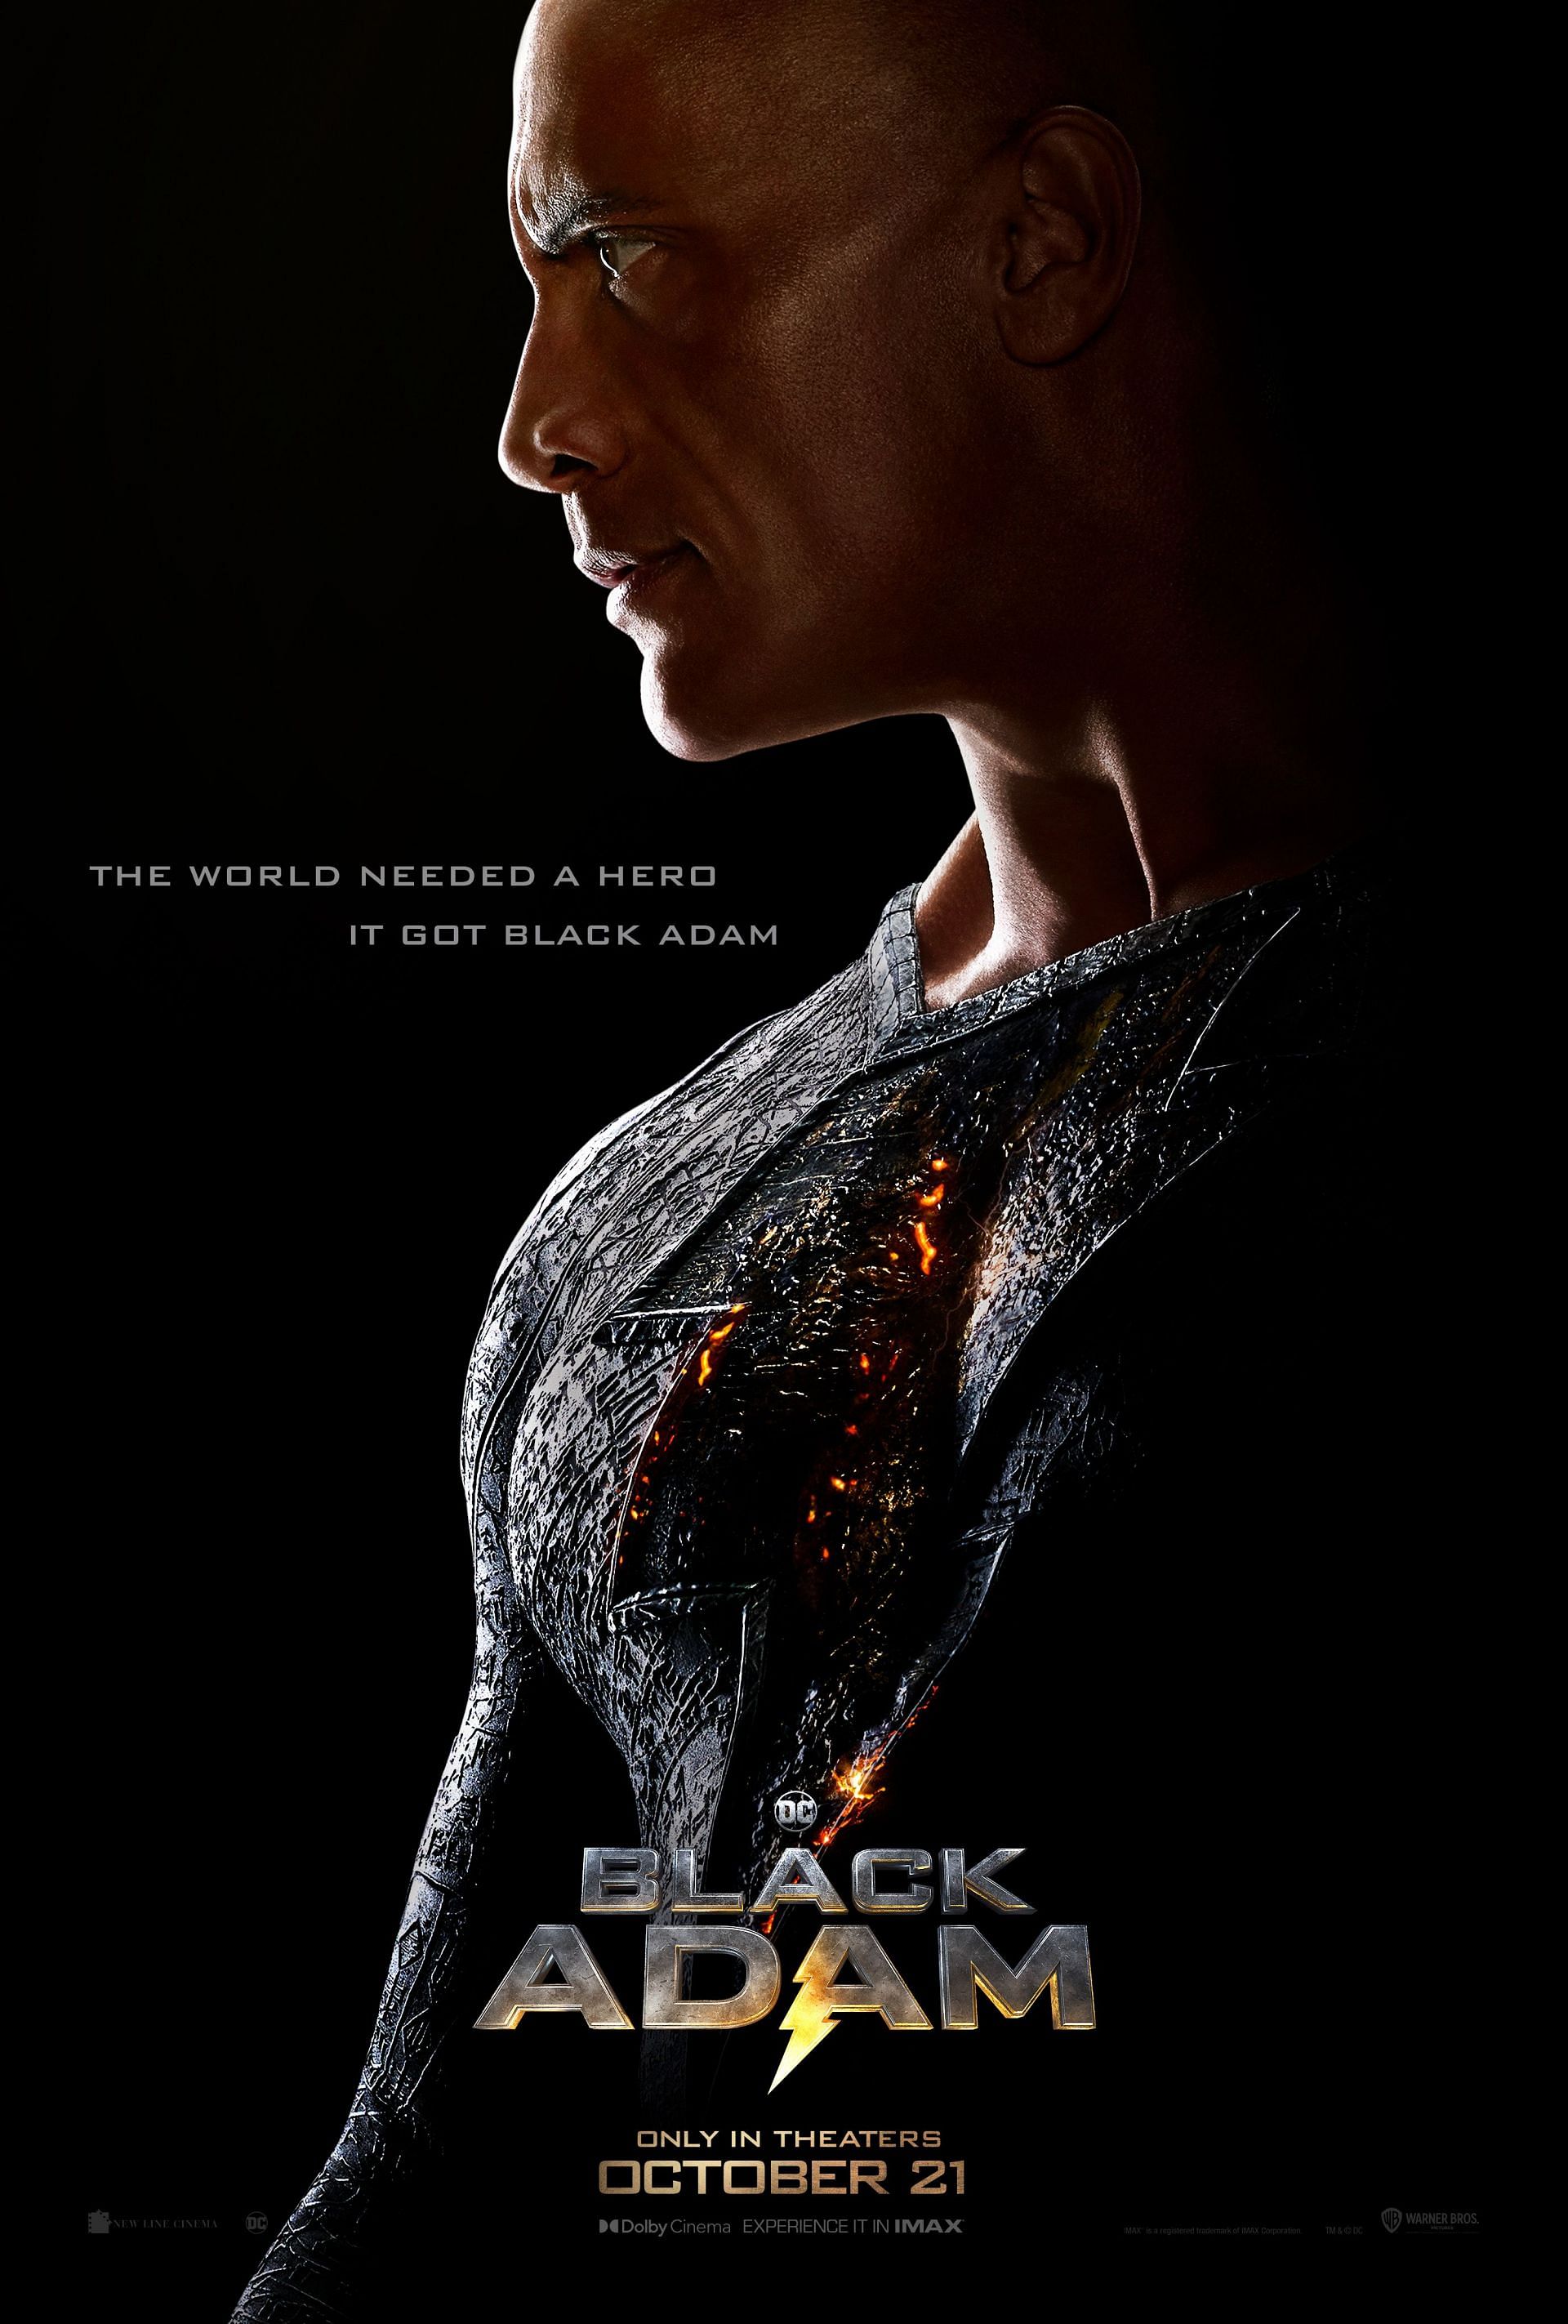 The official poster of Black Adam (Image via IMDb)